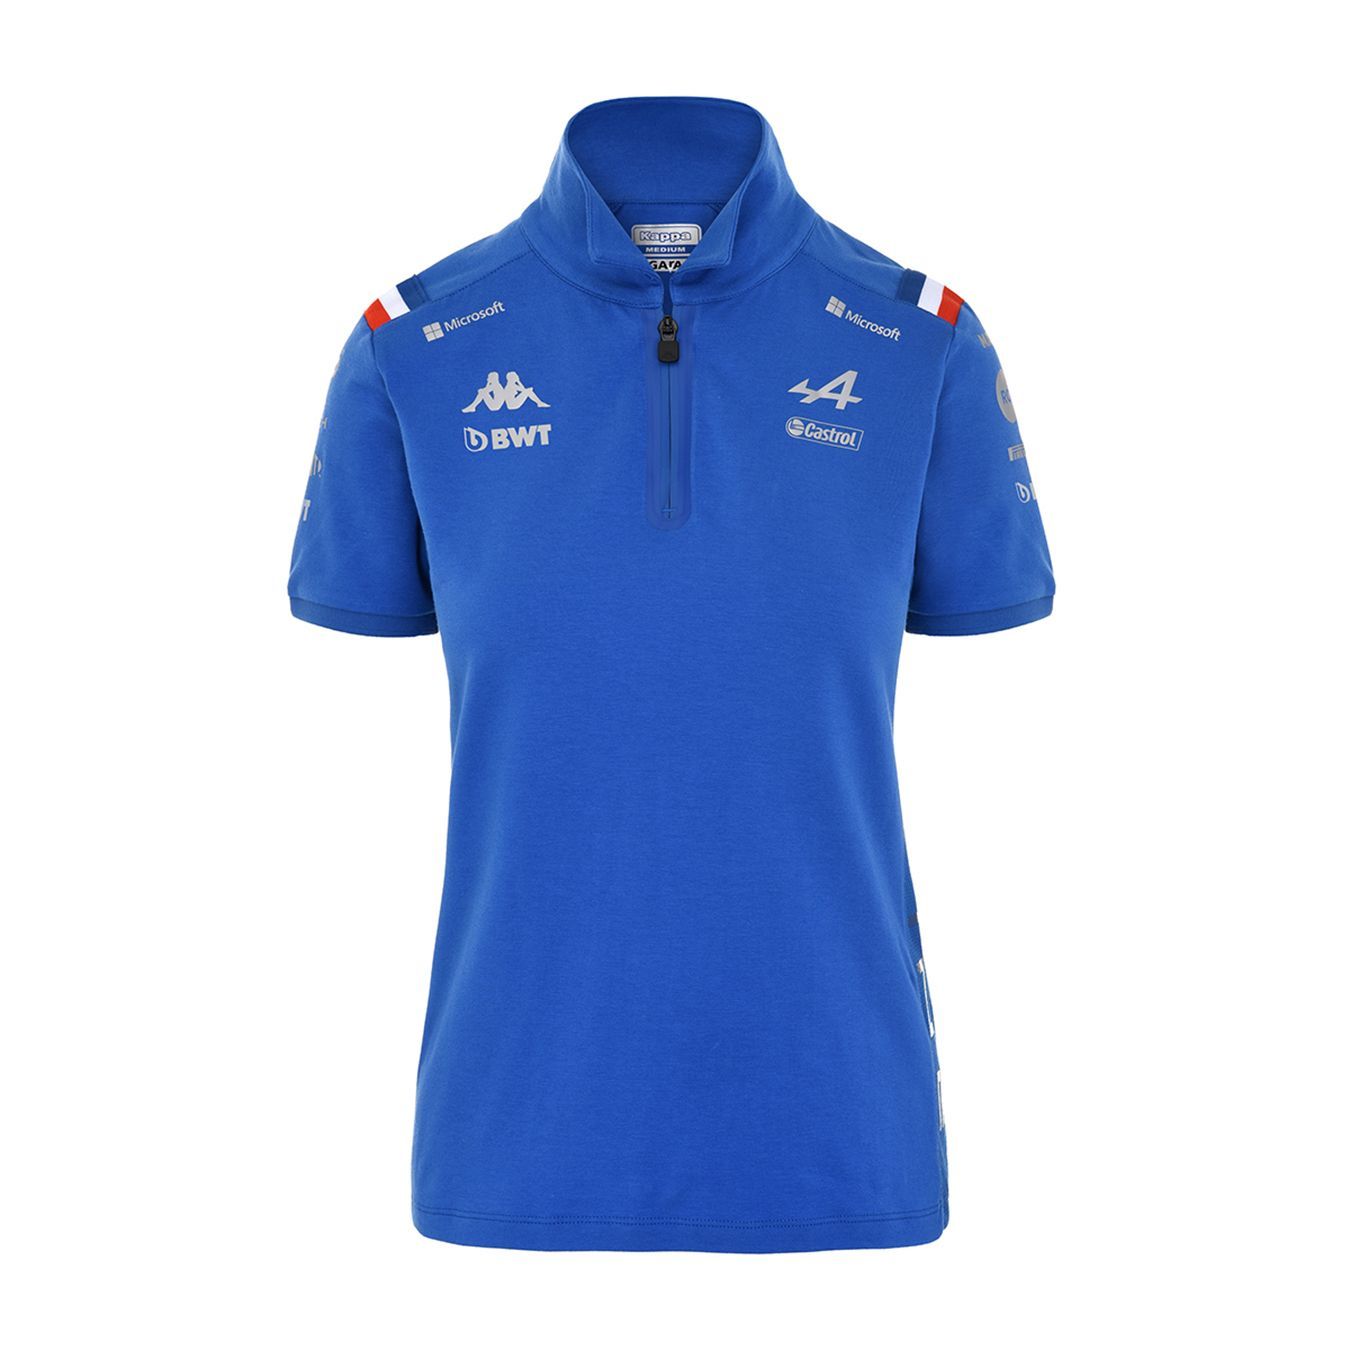 Polo ALPINE F1 Team Bleu - Femme